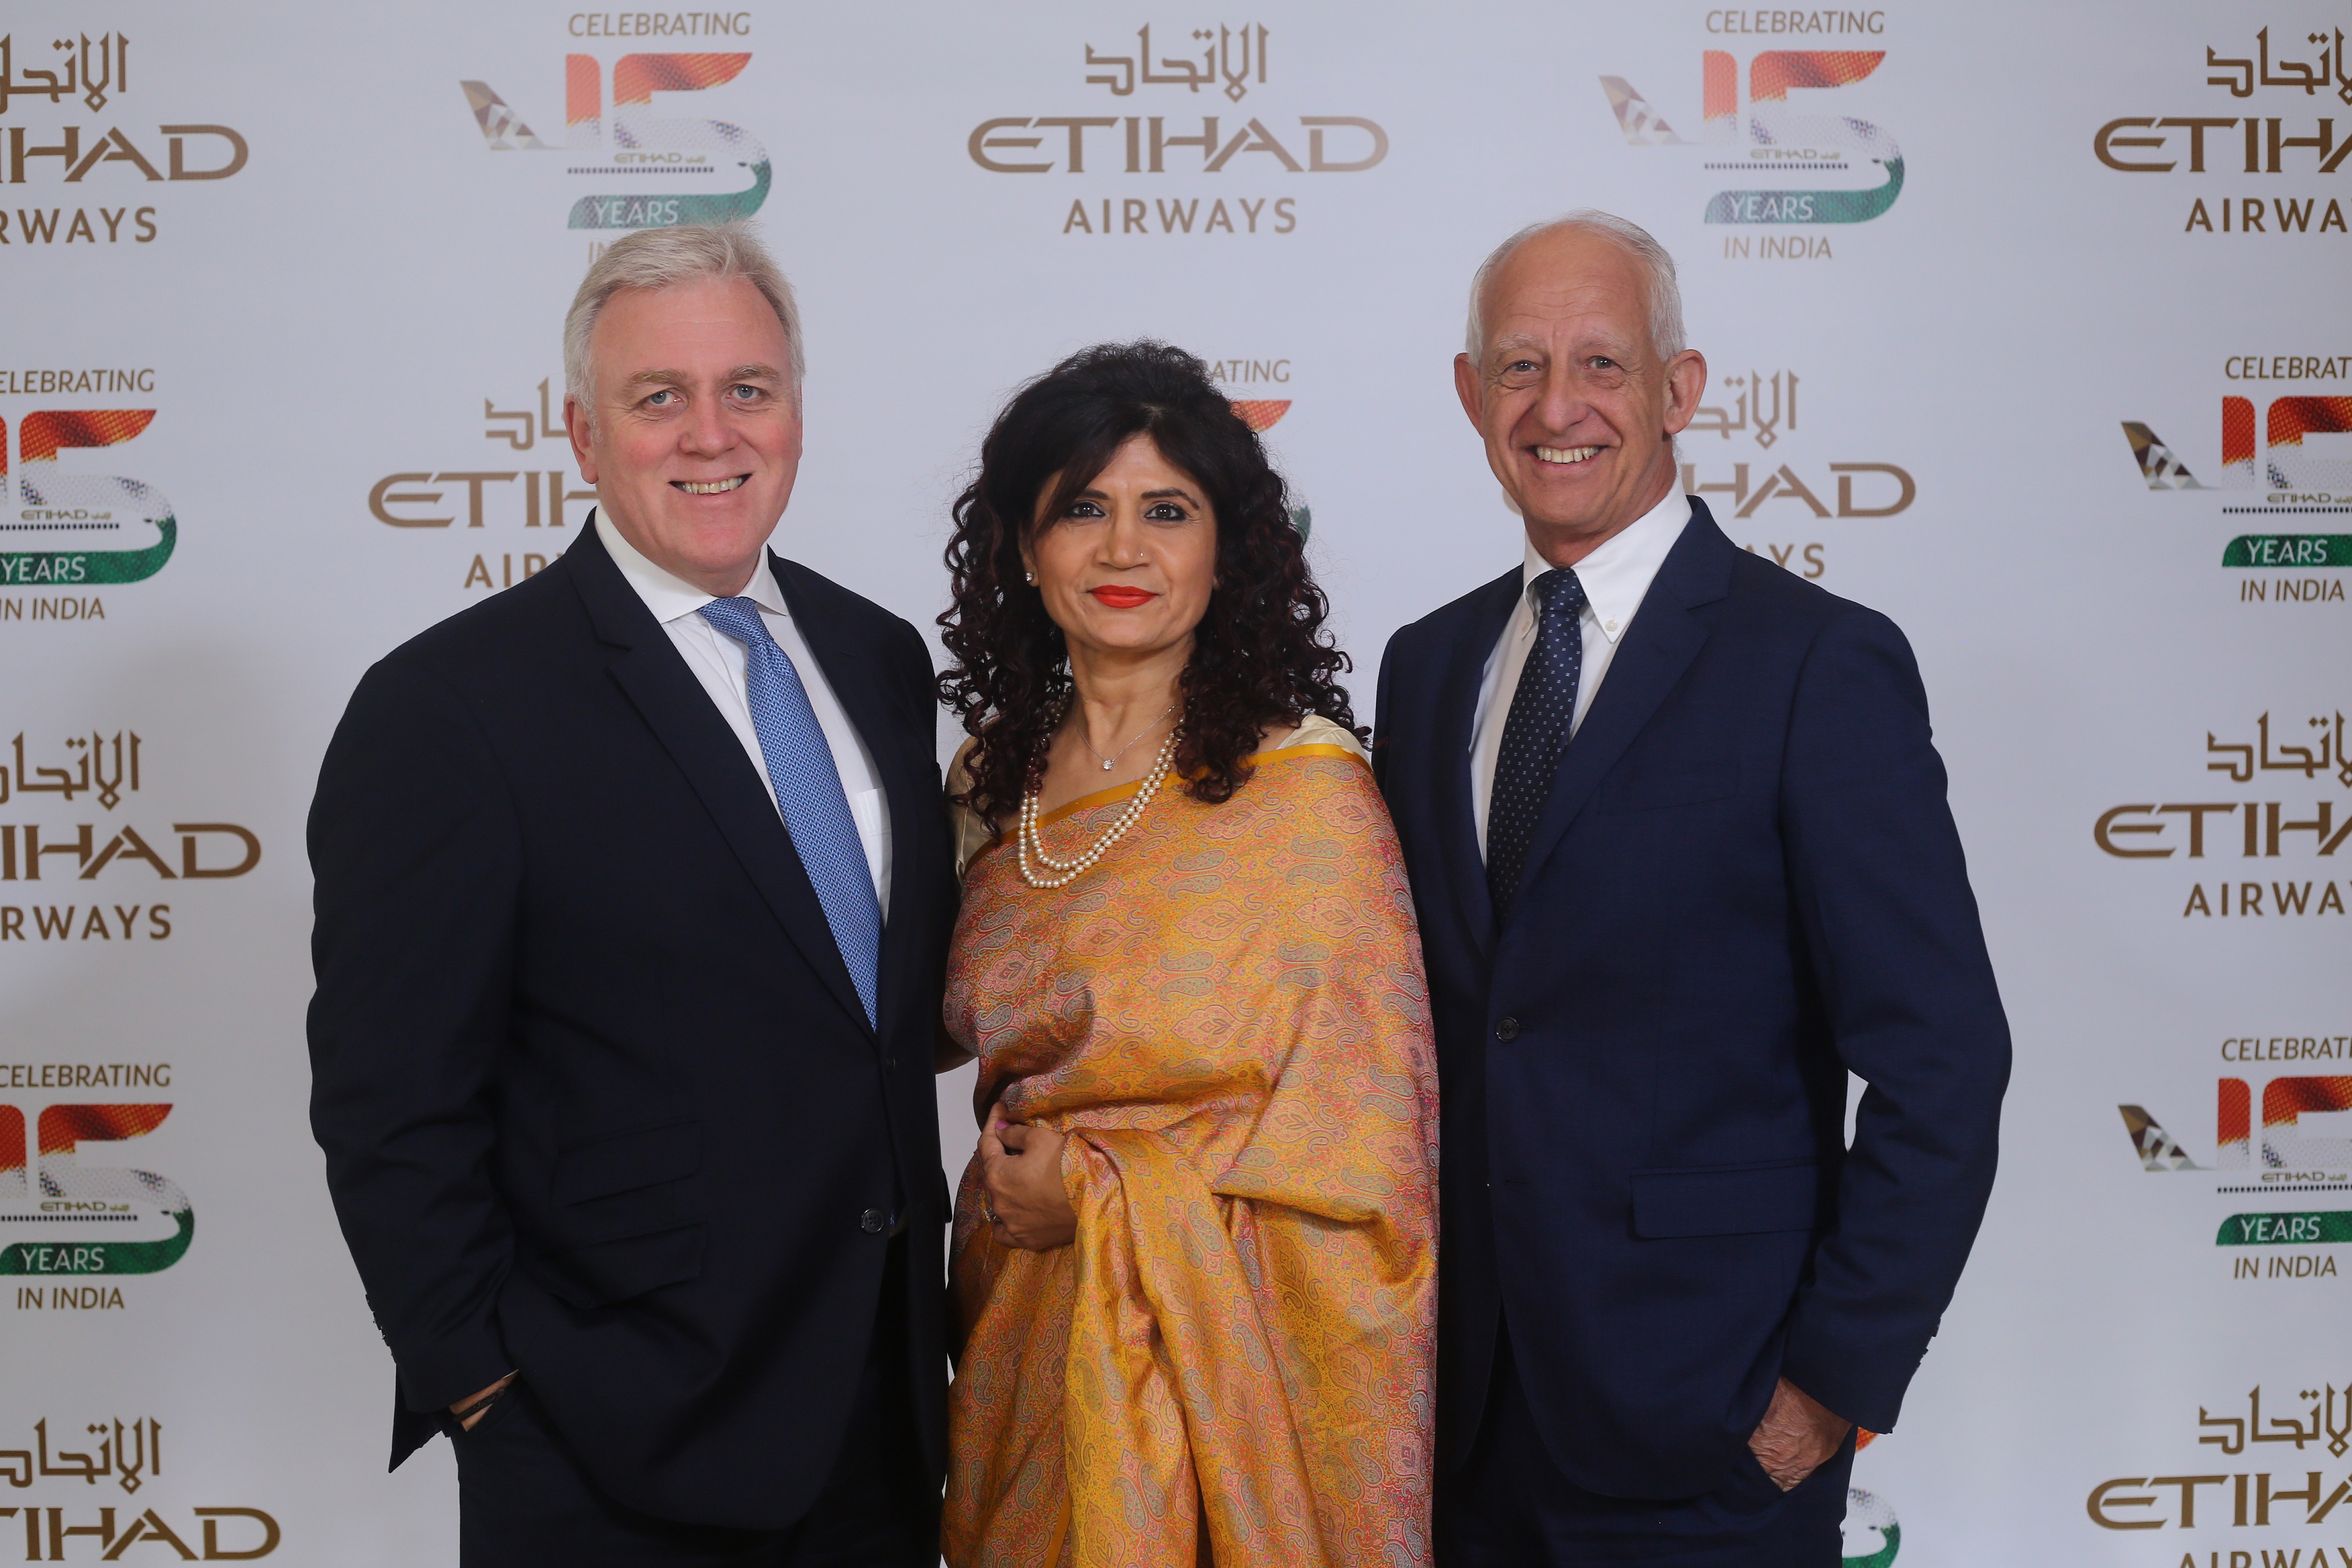 Etihad Airways Celebrates 15 Years Of Flying To India